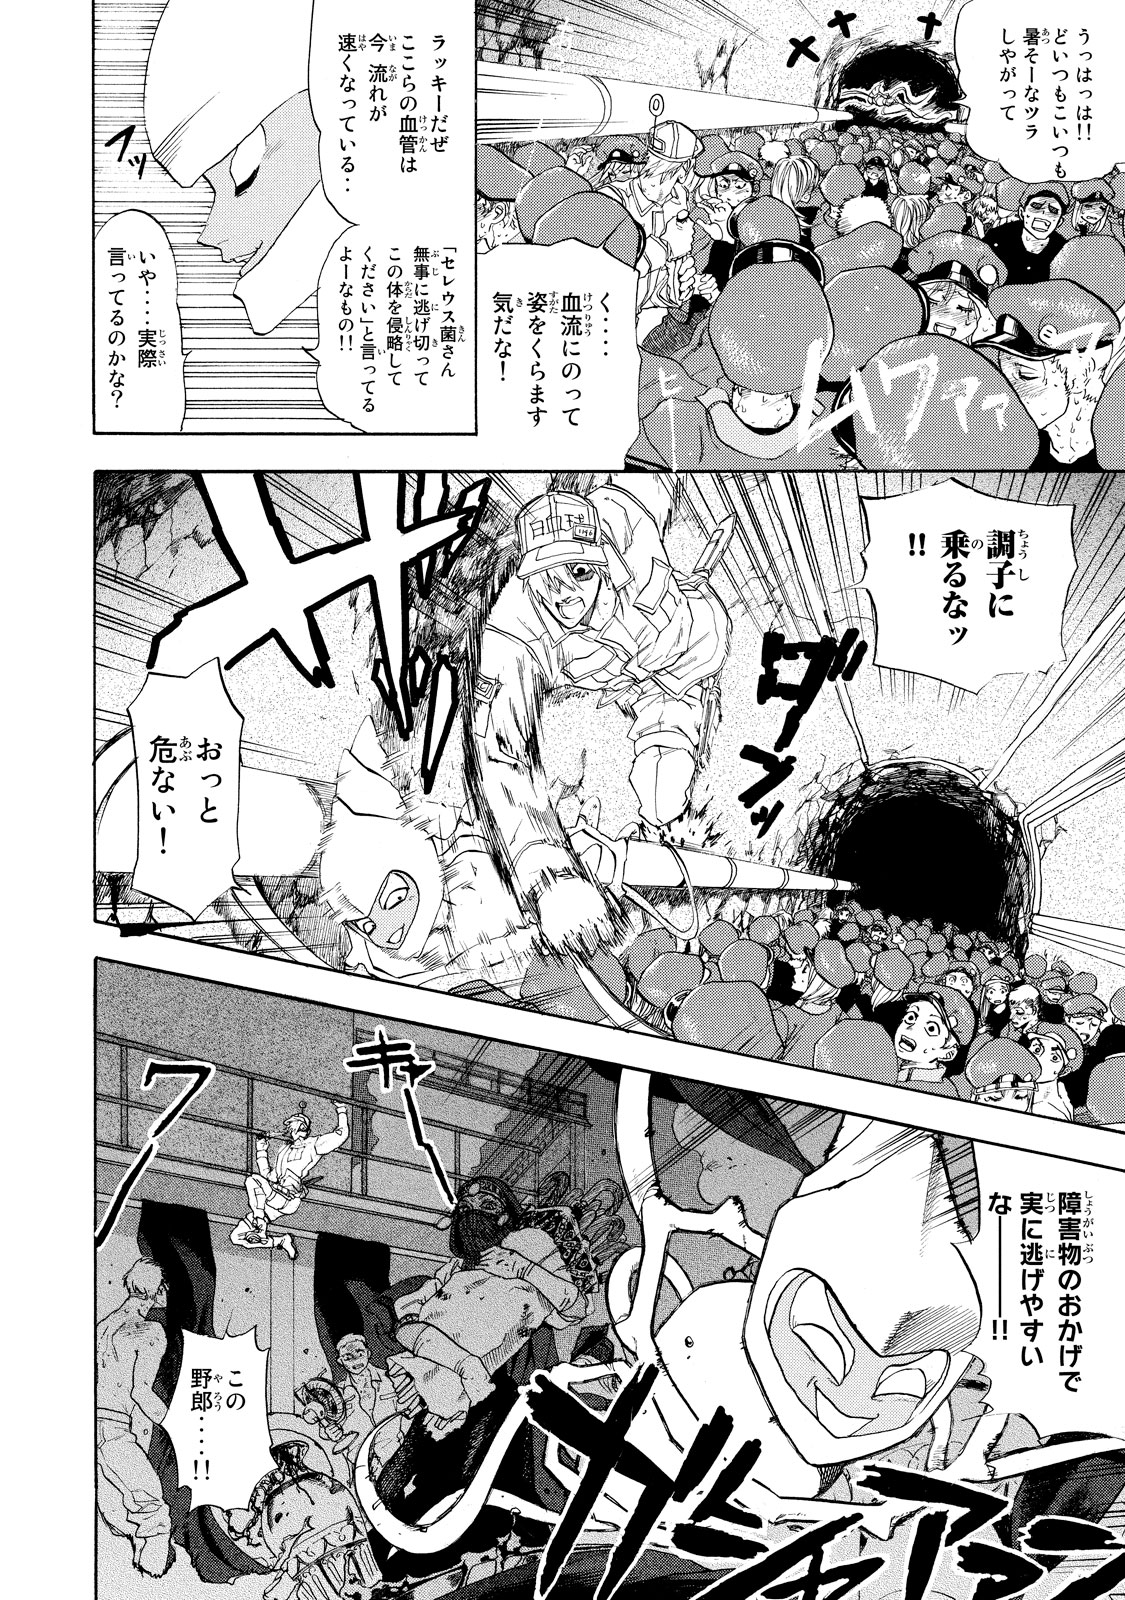 Hataraku Saibou - Chapter 6 - Page 14